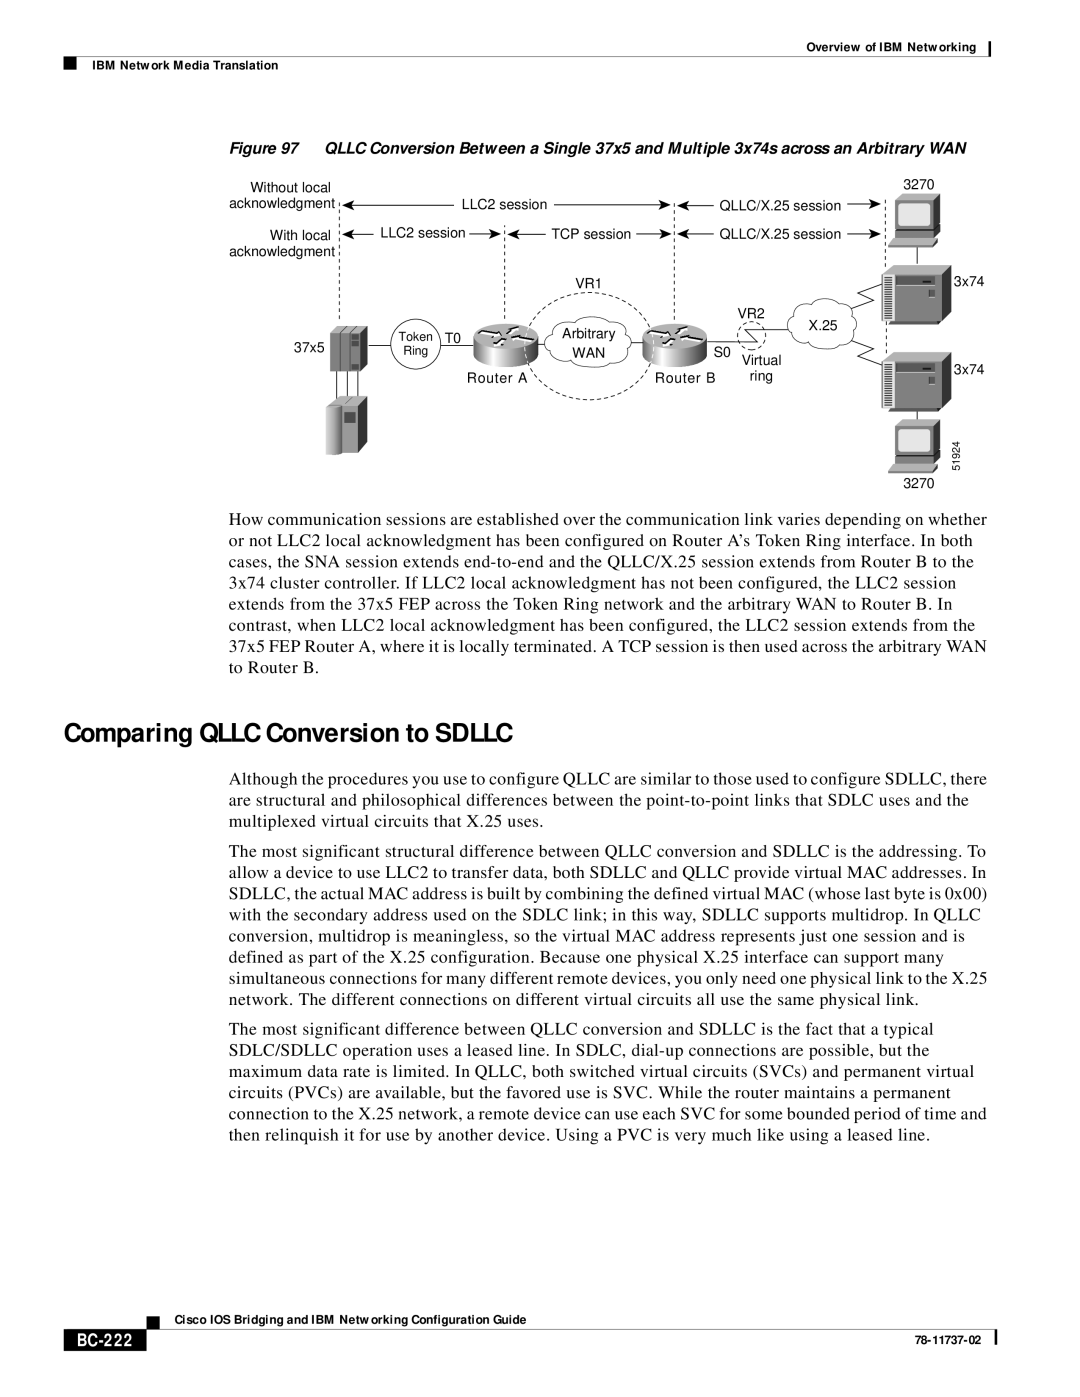 IBM BC-201 manual Comparing QLLC Conversion to SDLLC, BC-222 